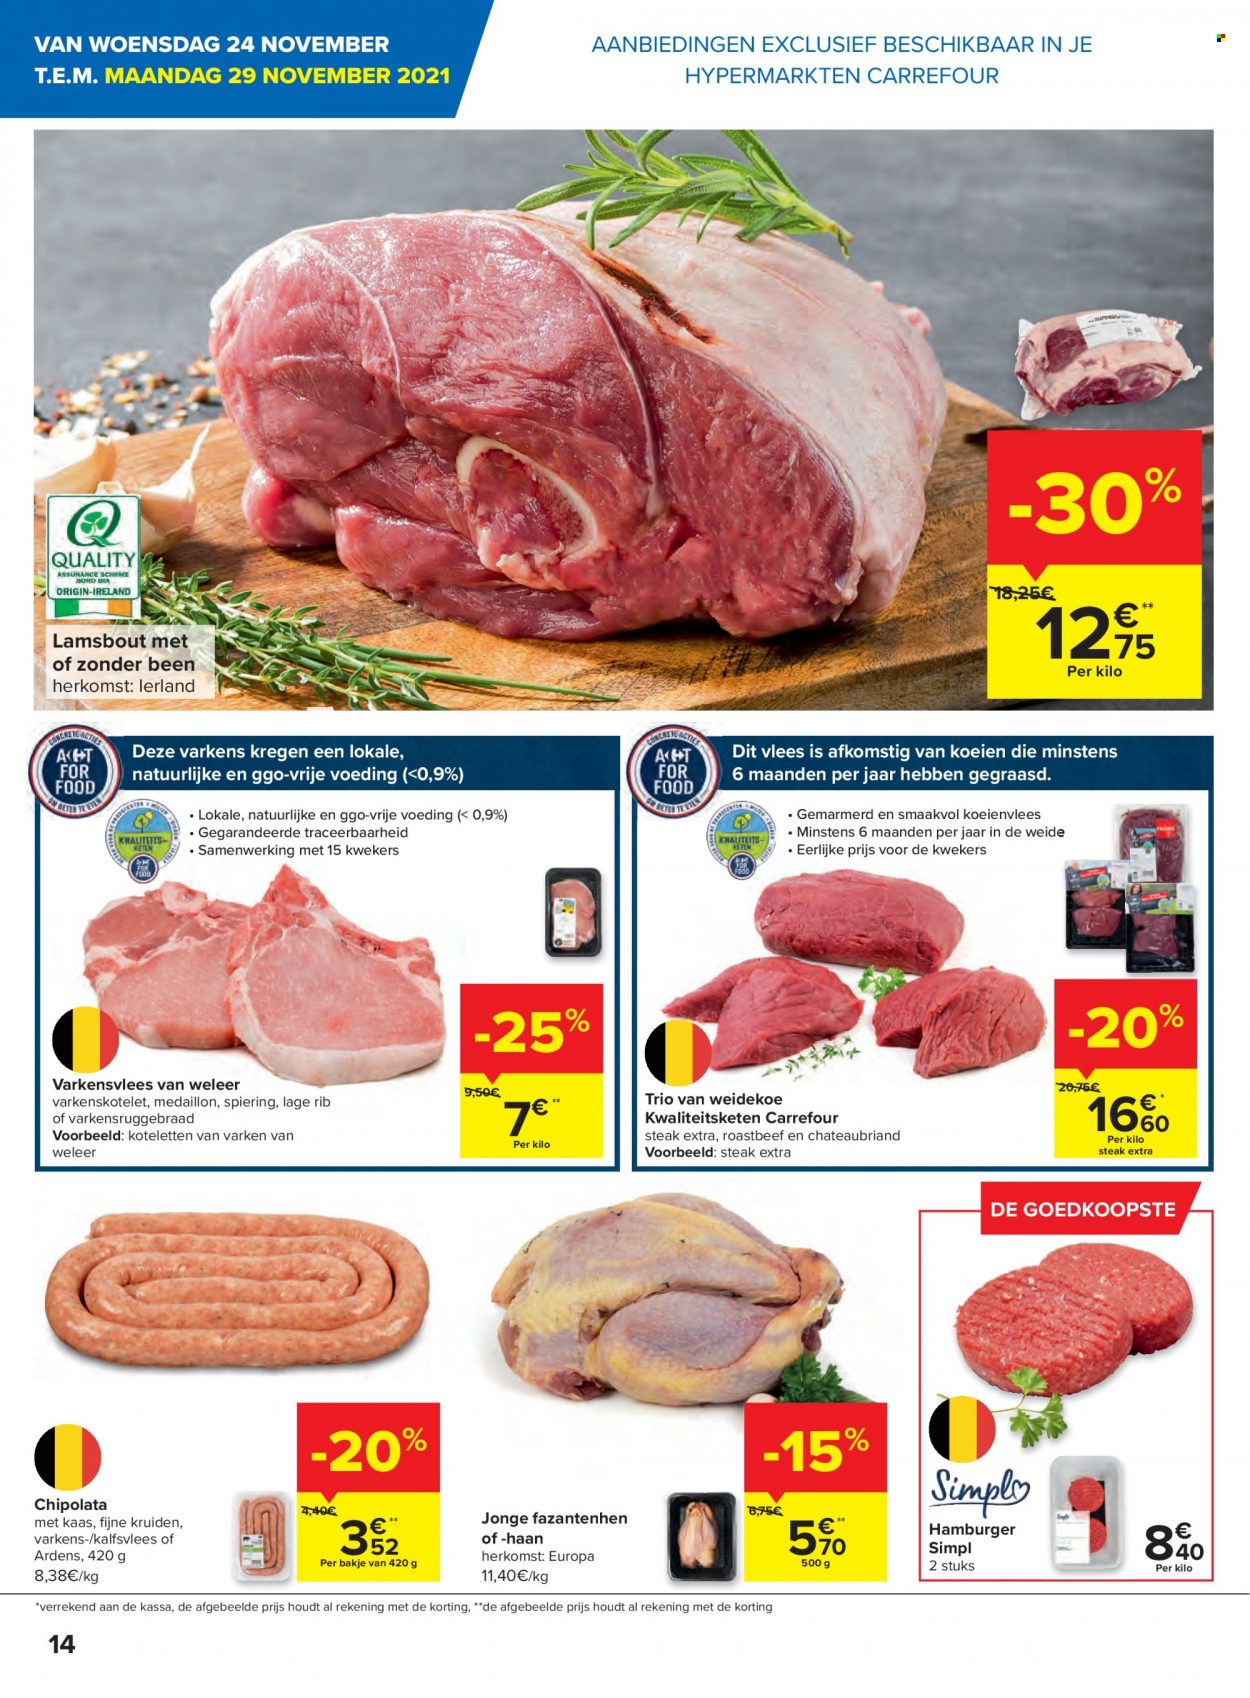 thumbnail - Carrefour hypermarkt-aanbieding - 24/11/2021 - 06/12/2021 -  producten in de aanbieding - steak, varkensvlees, roastbeef, kalfsvlees, chipolataworstjes, kaas. Pagina 14.